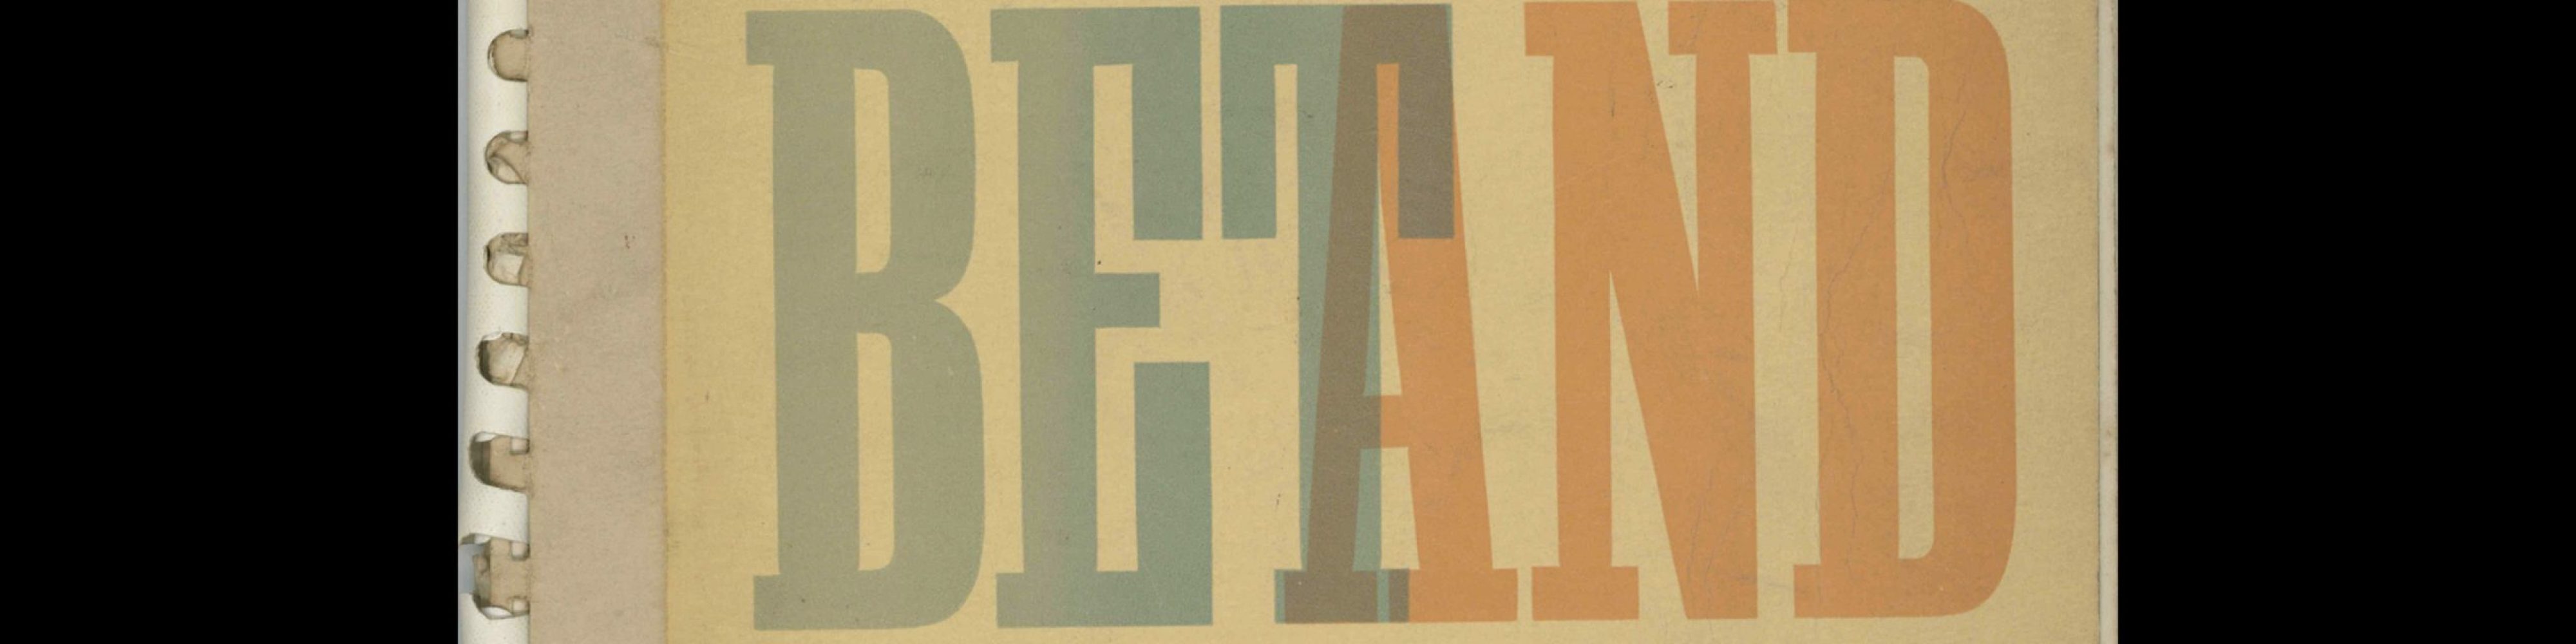 Alphabet and Image 1, Shenval Press, 1946